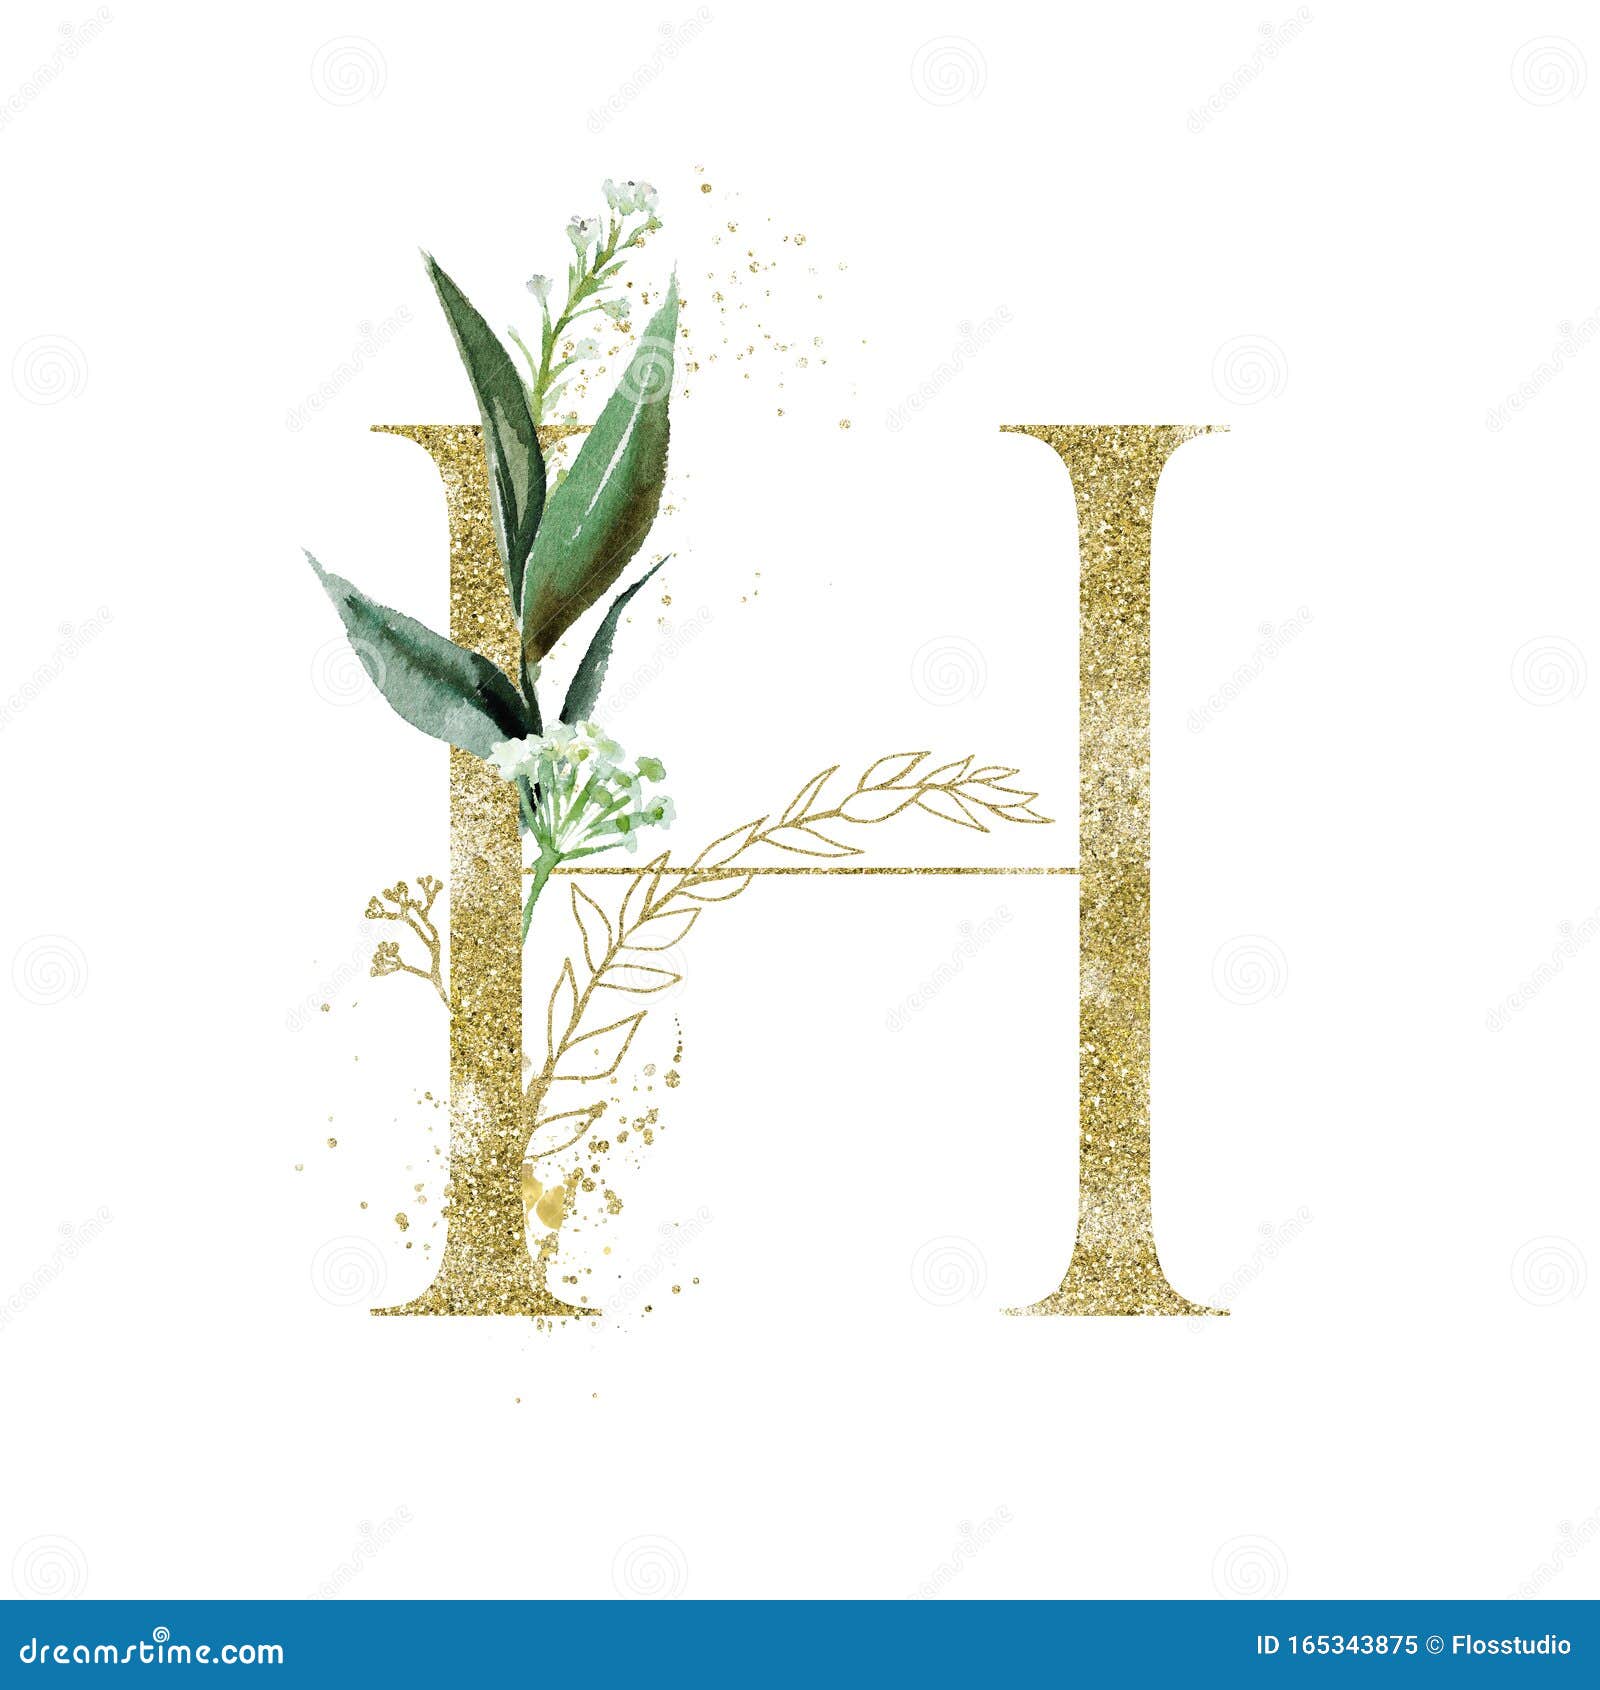 gold floral alphabet - letter h with botanic branch bouquet composition. unique collection for wedding invites decoration & other